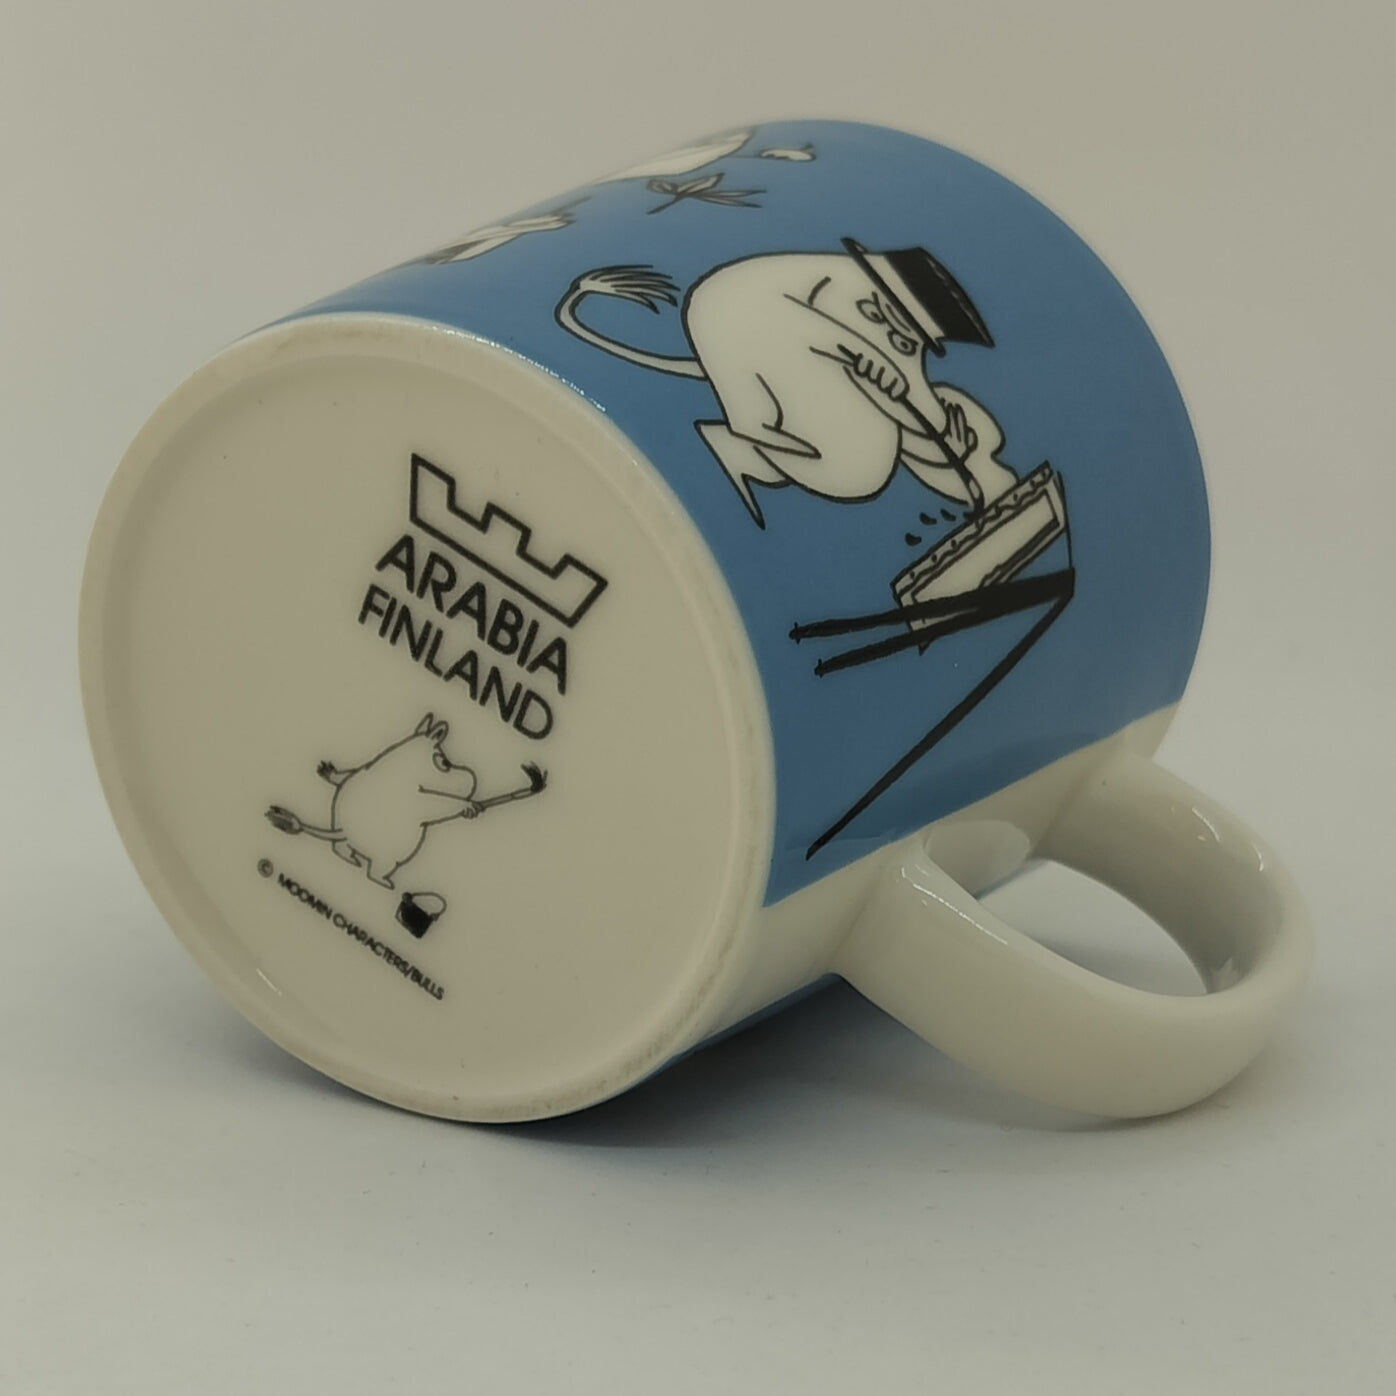 Moomin Mug: Painting Moomins, Blue (1990-1996) 